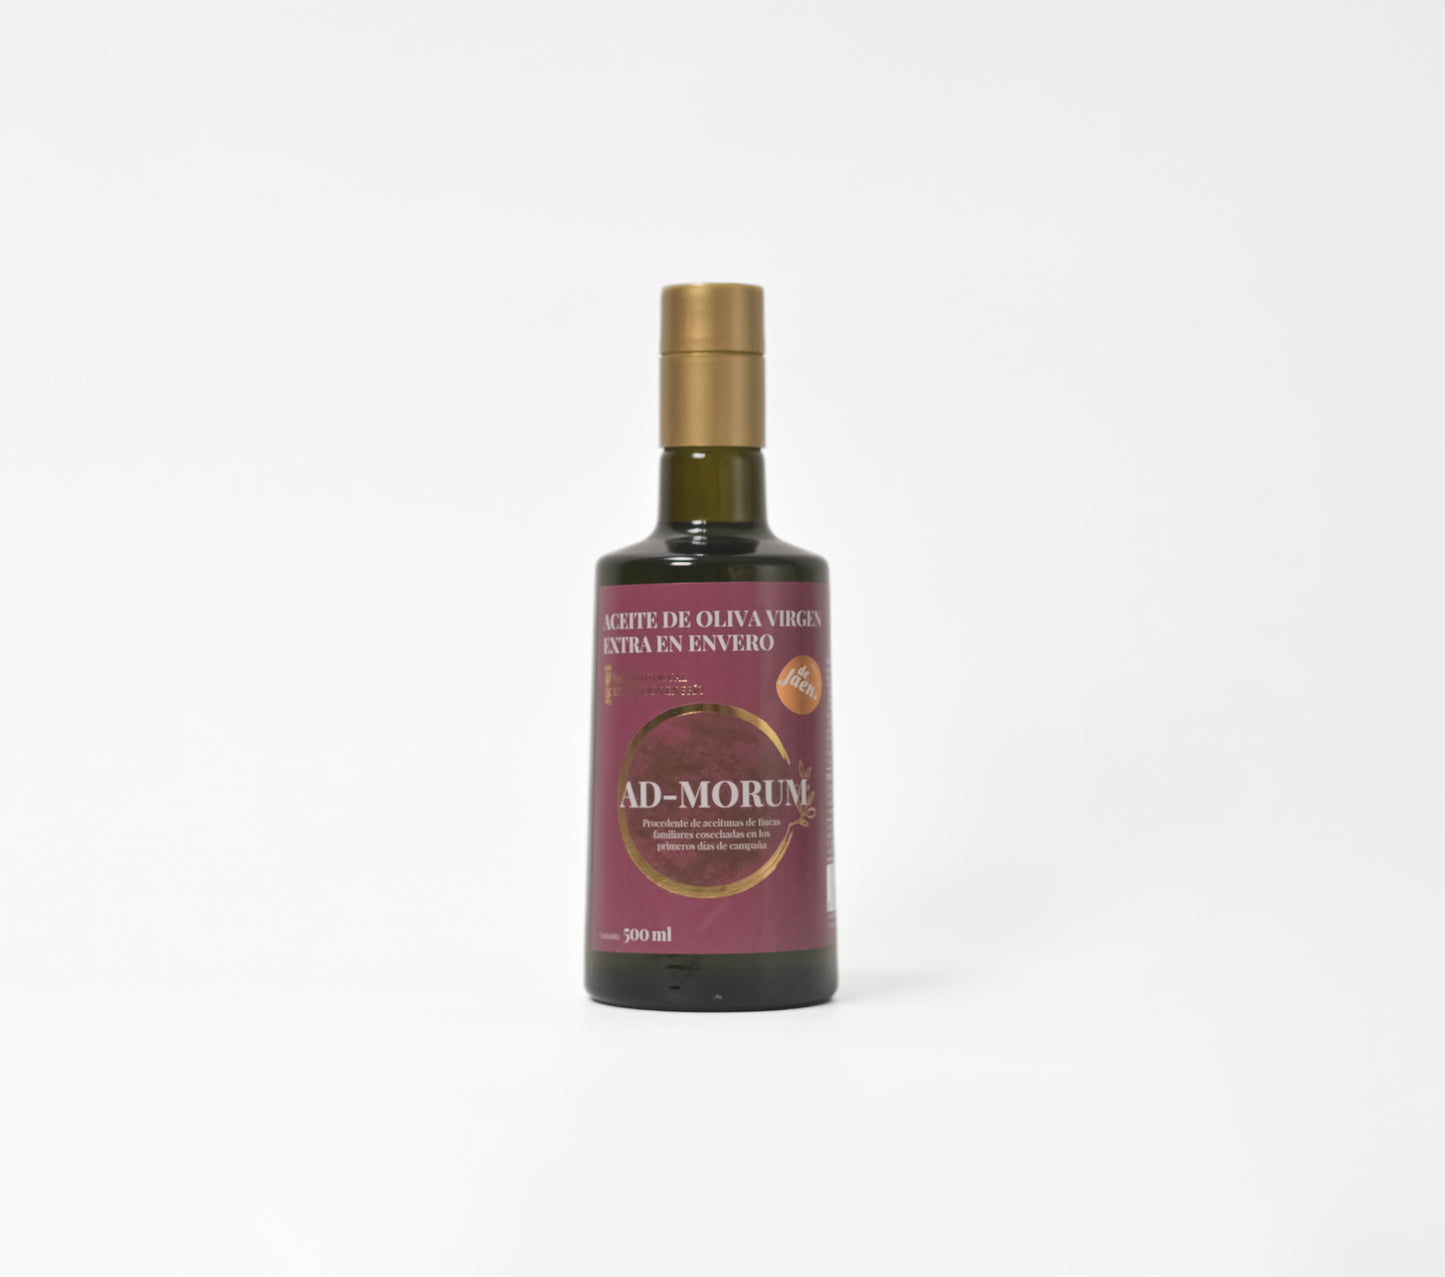 AOVE Temprano y Envero - Caja 6 botellas (500ml) MIX